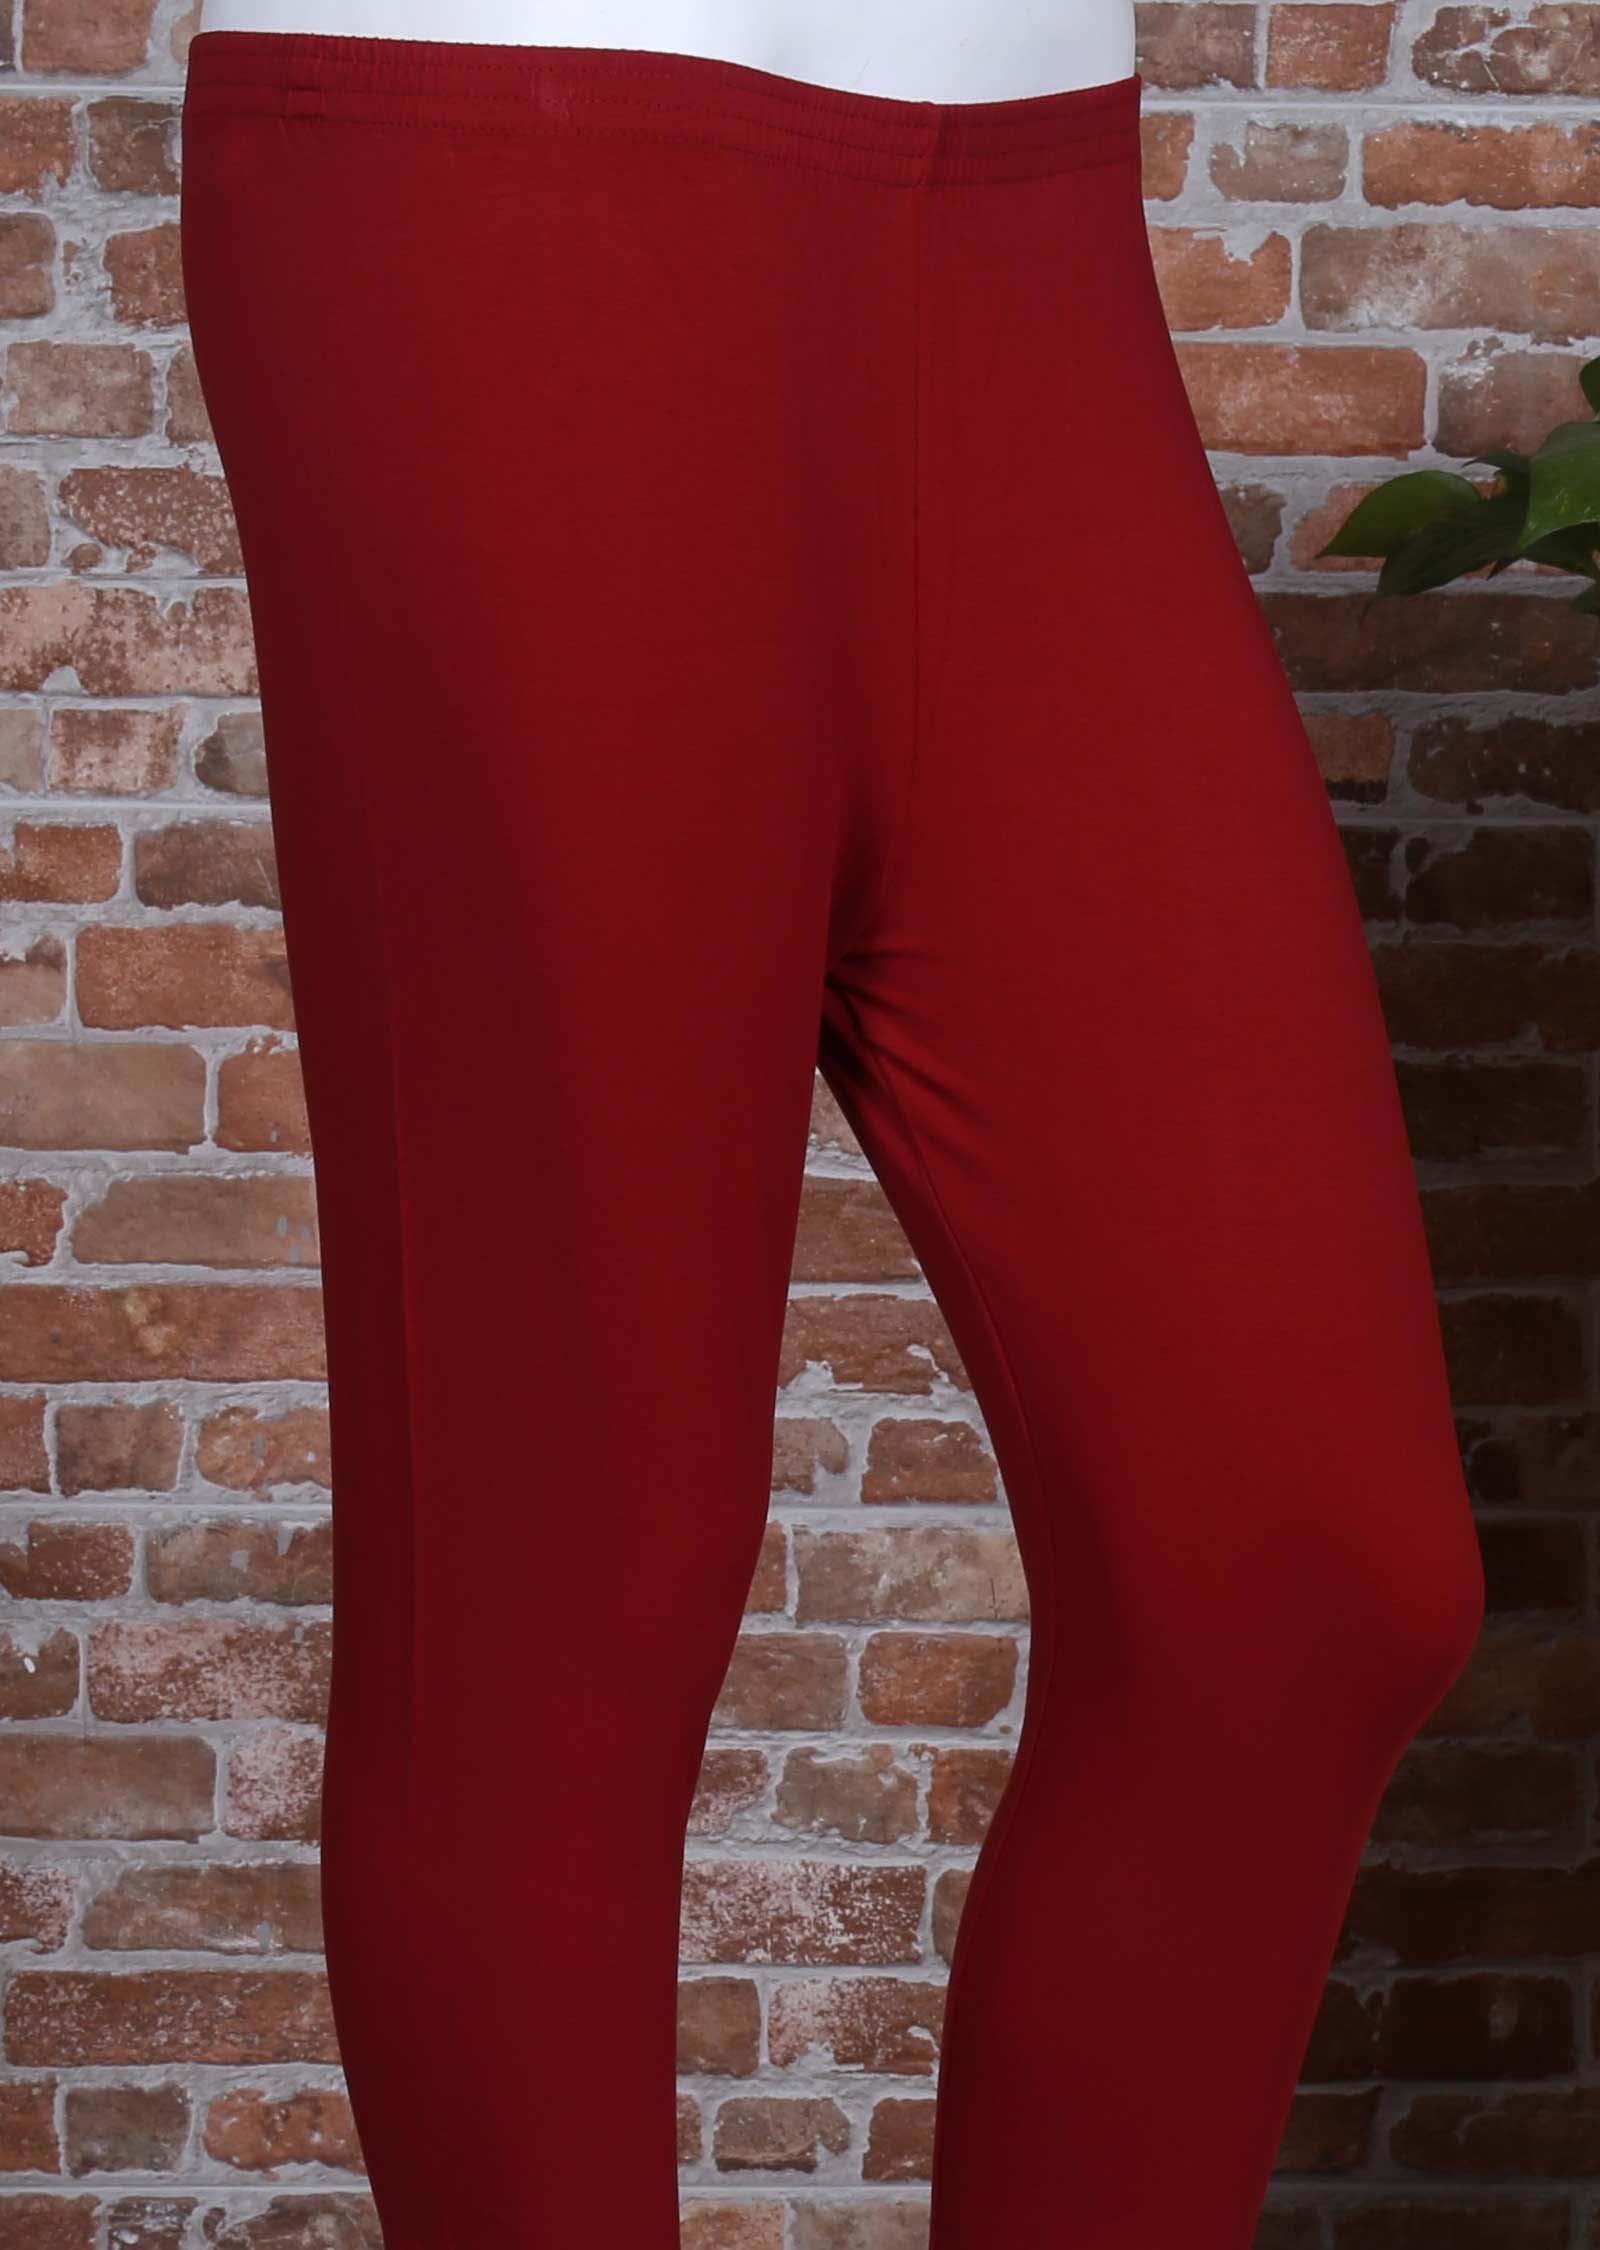 Reddish maroon Lycra leggings